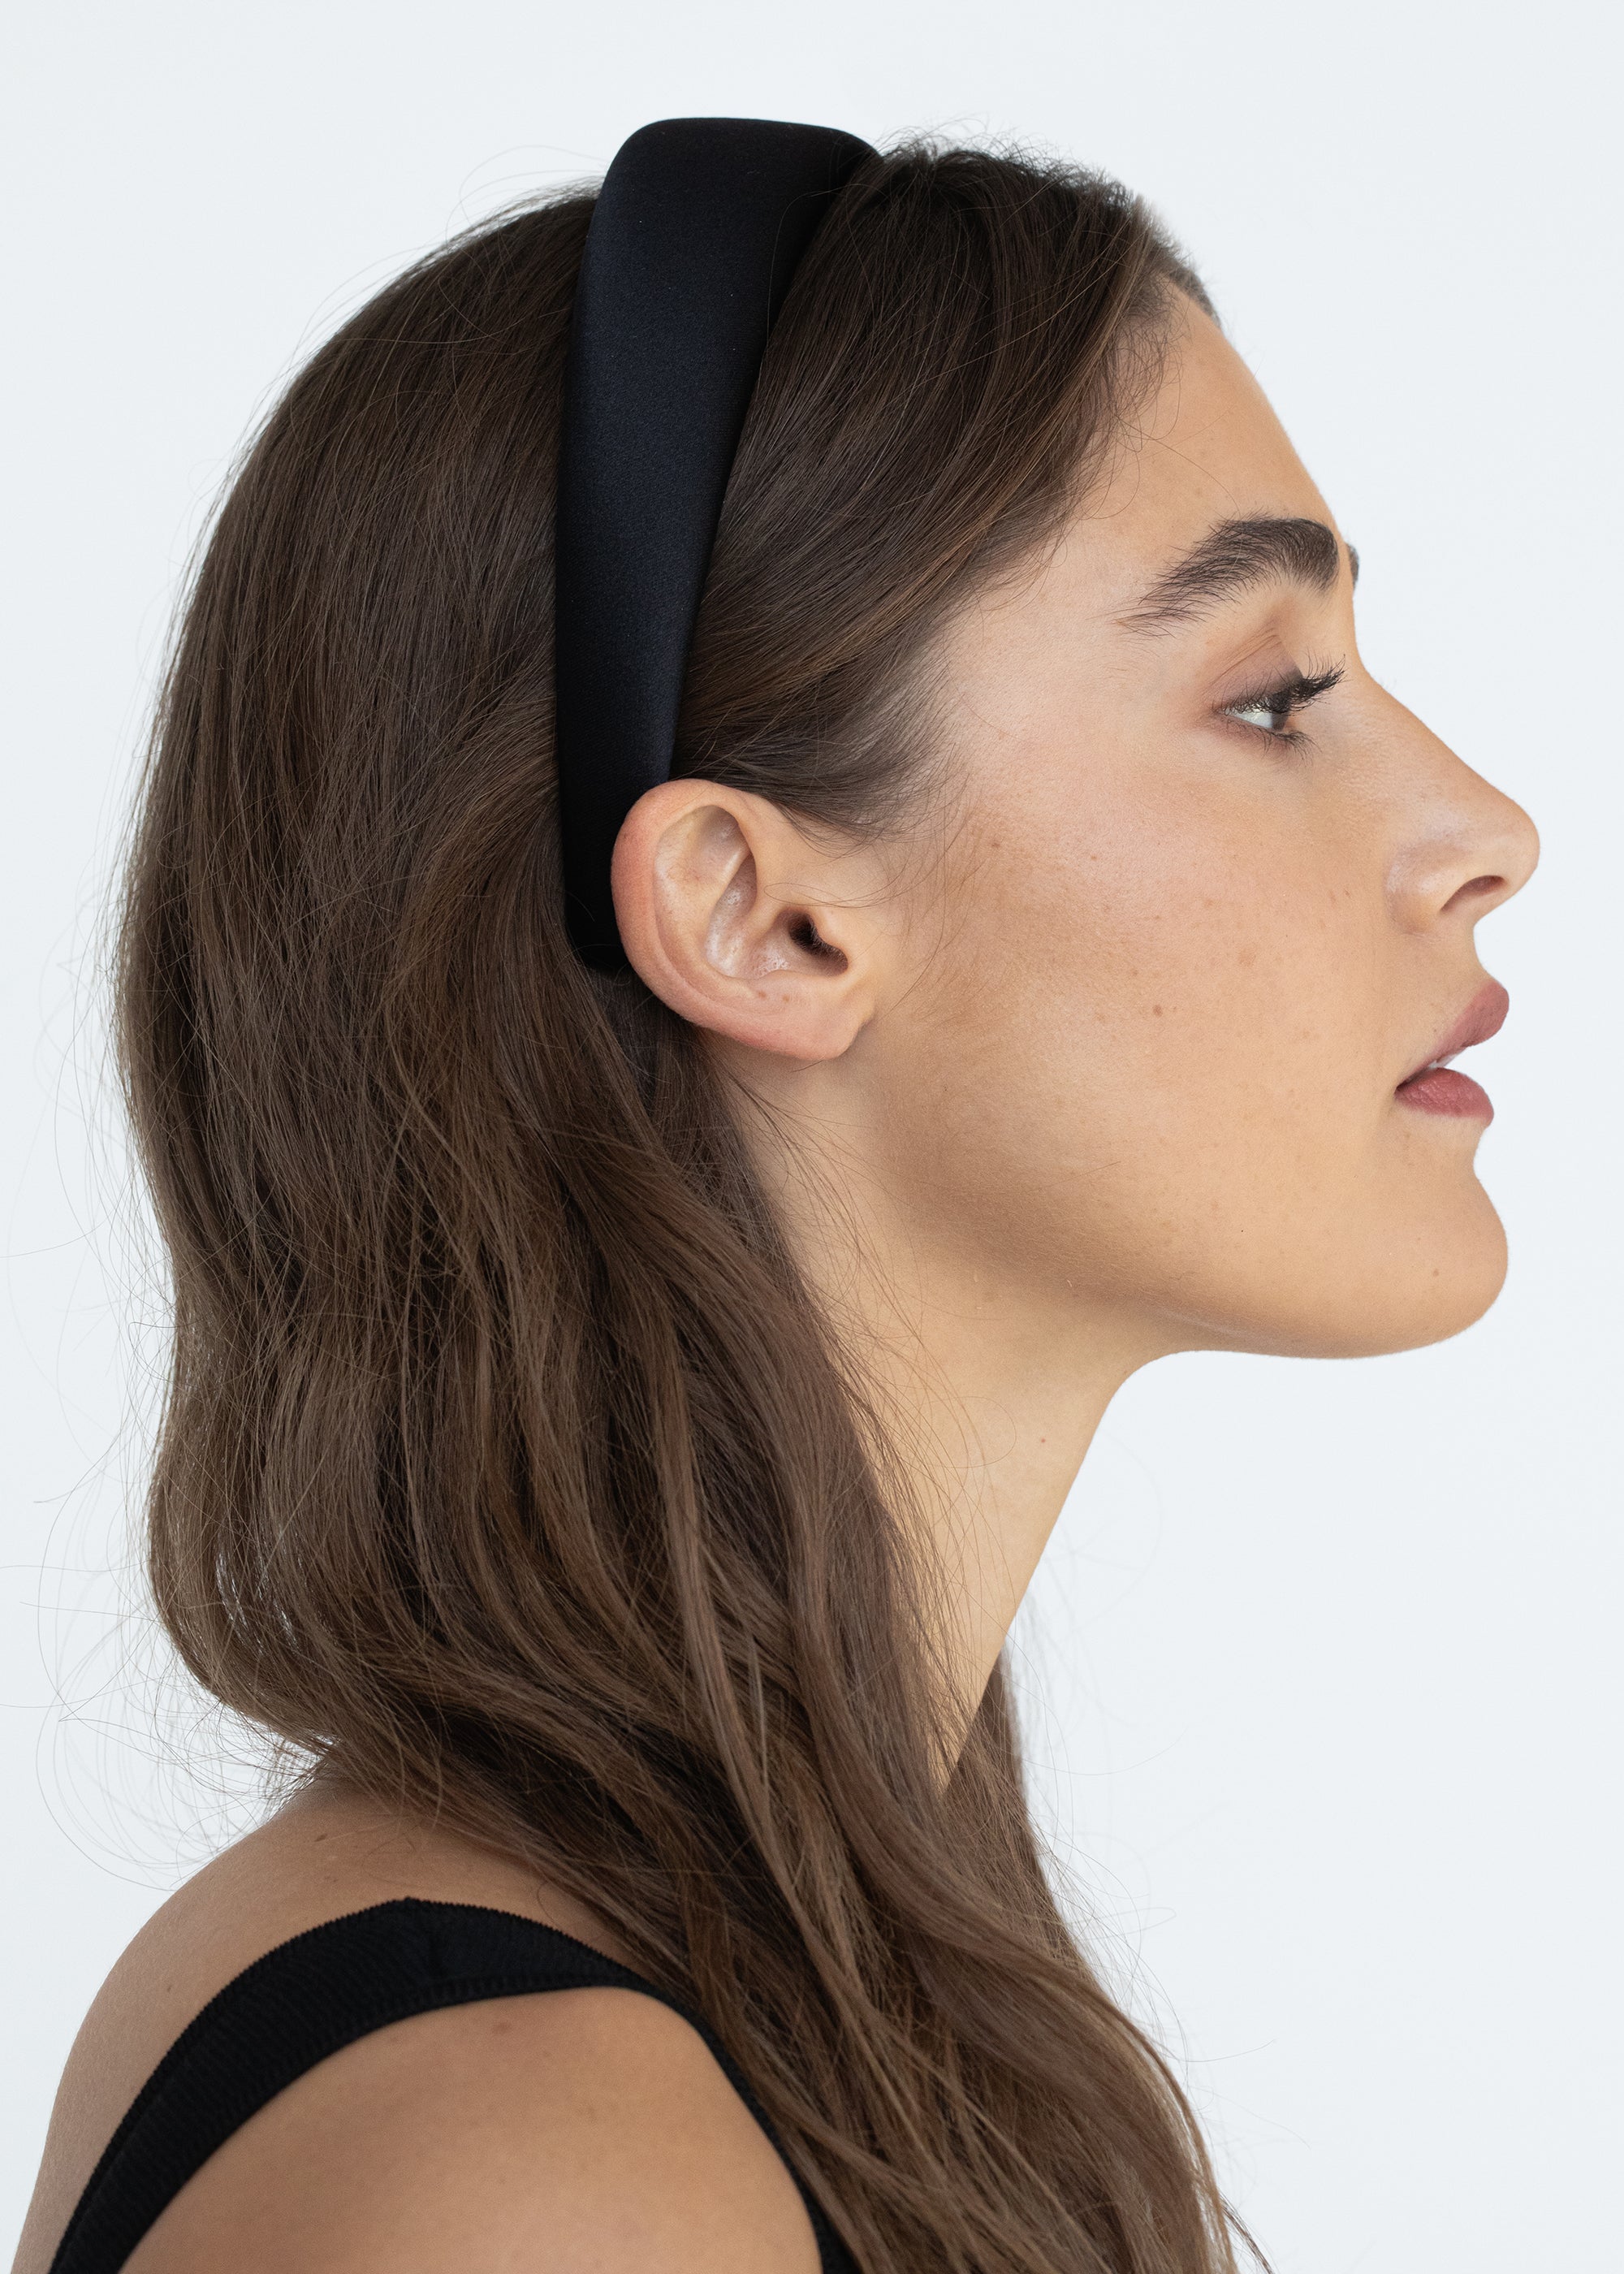 Kate Bridal Headband, Crystal Beaded Headband